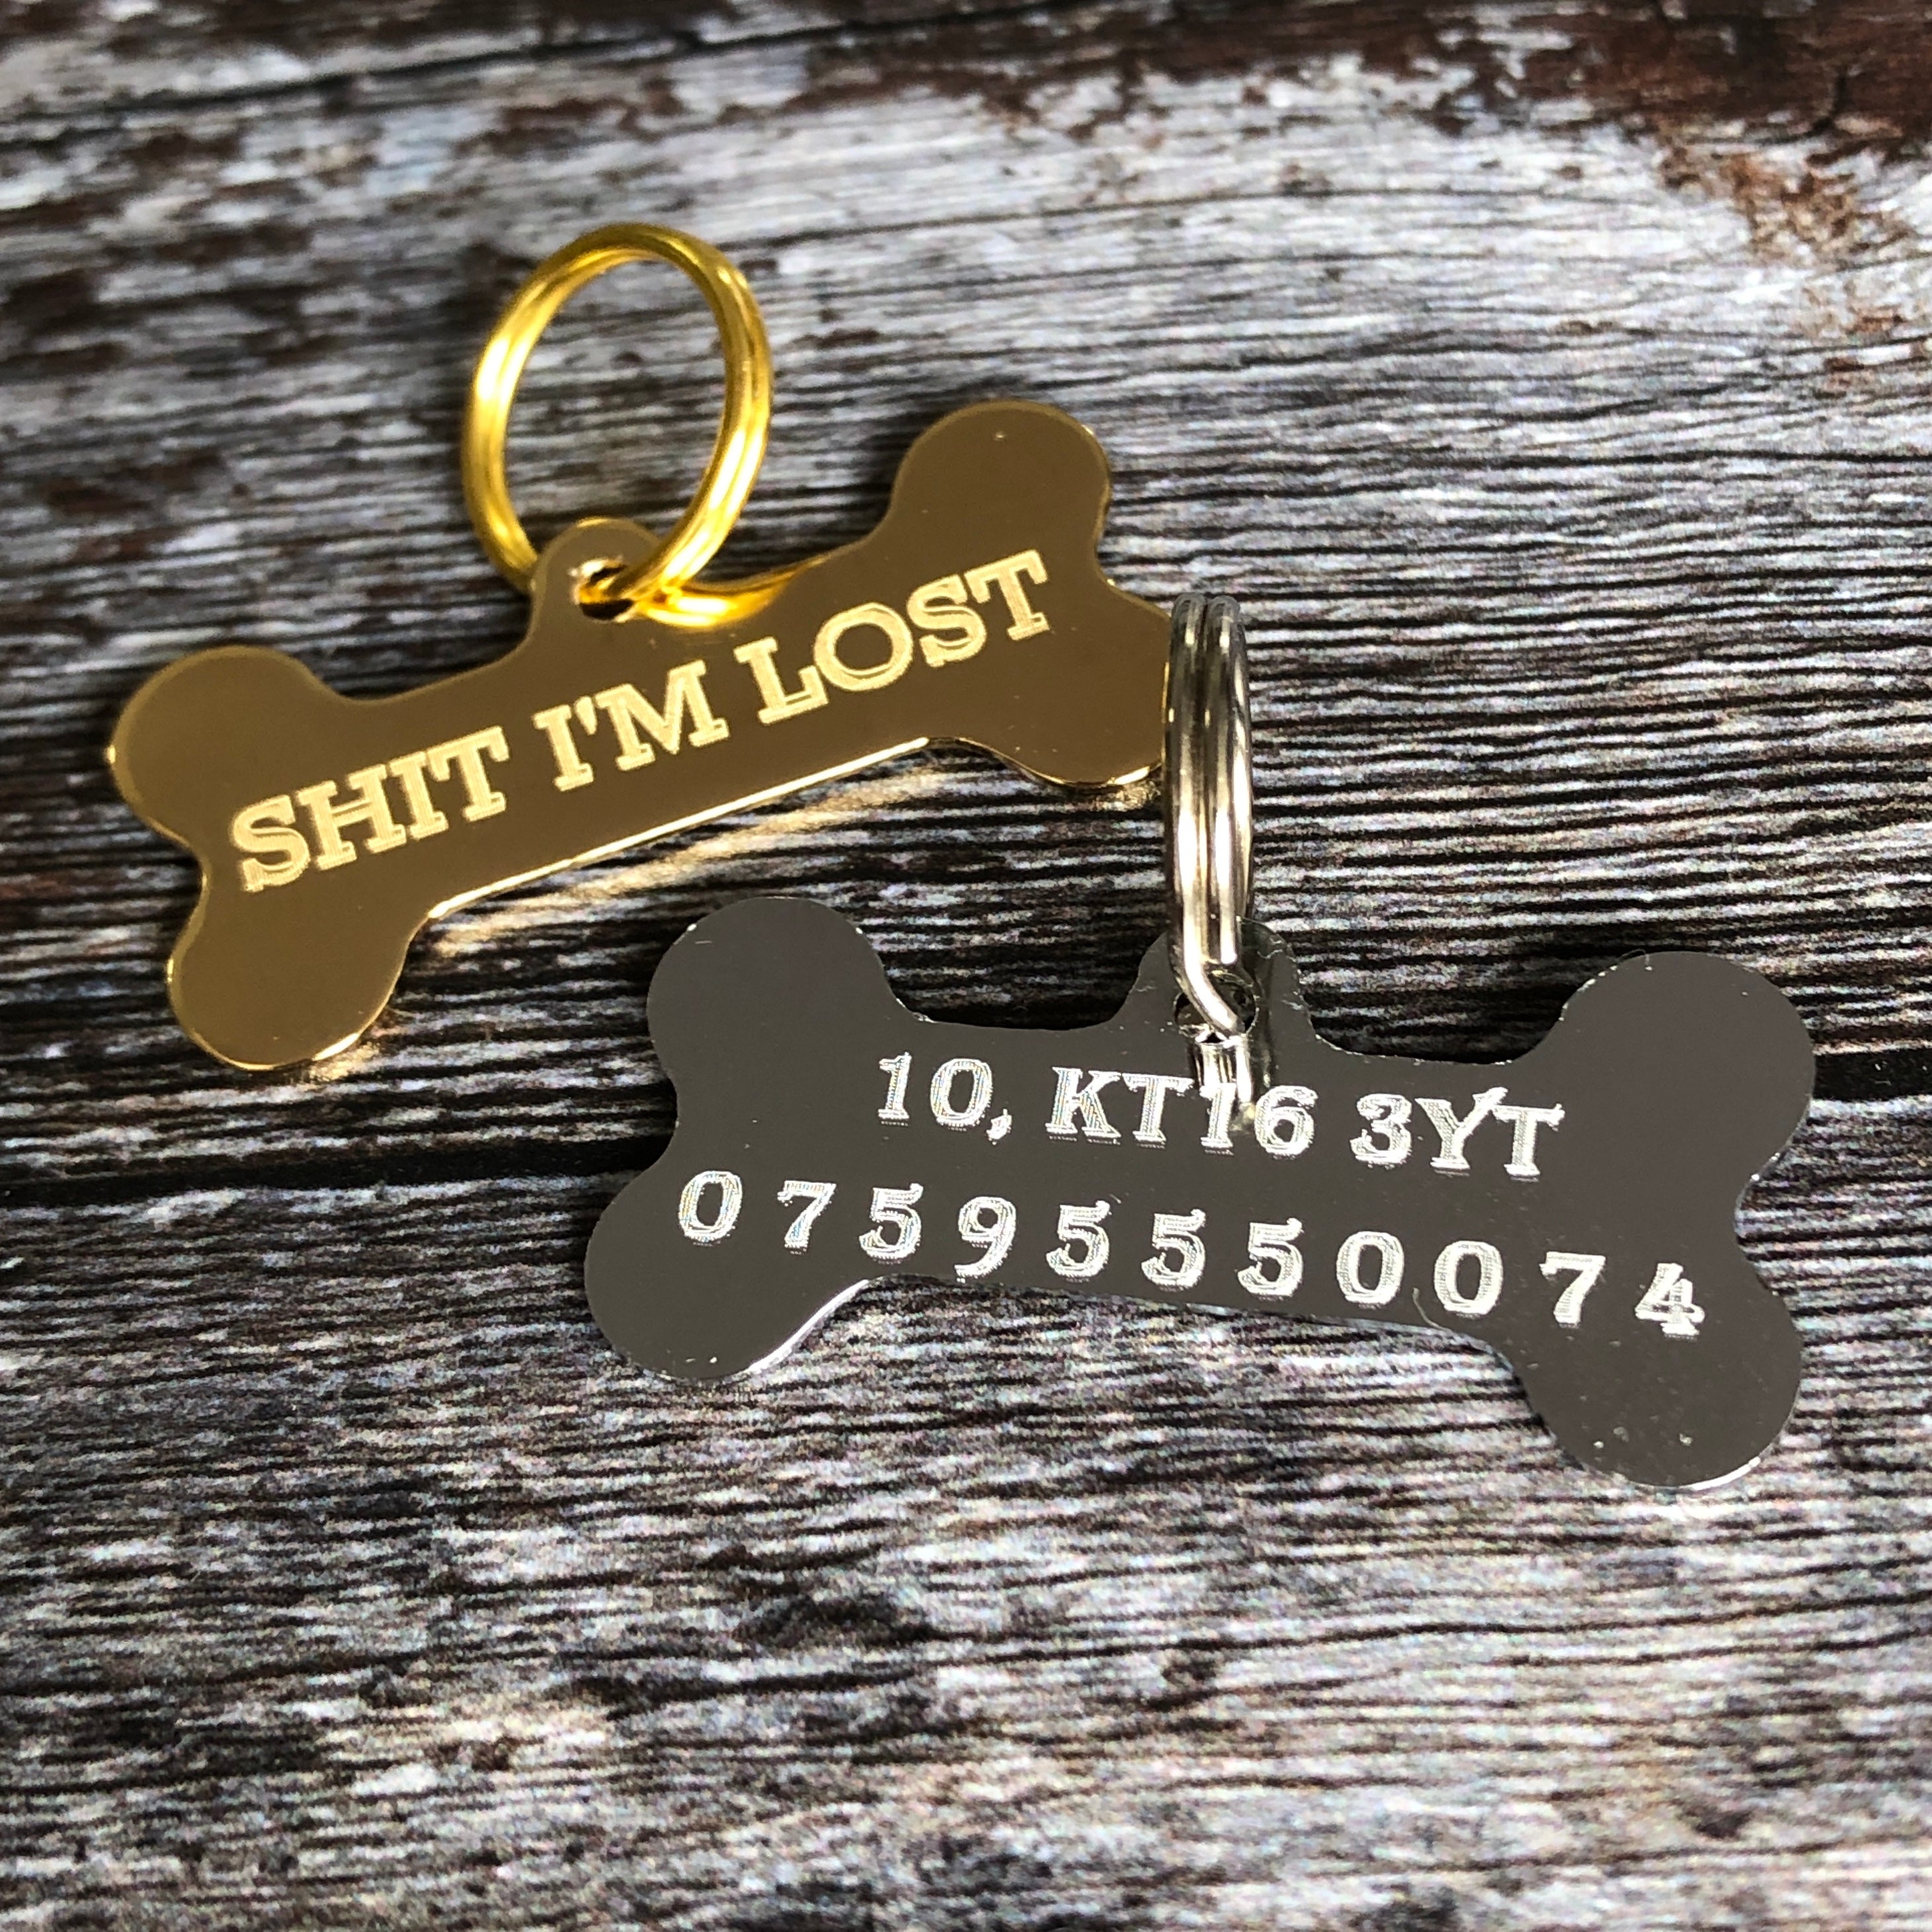 shit im lost dog tag